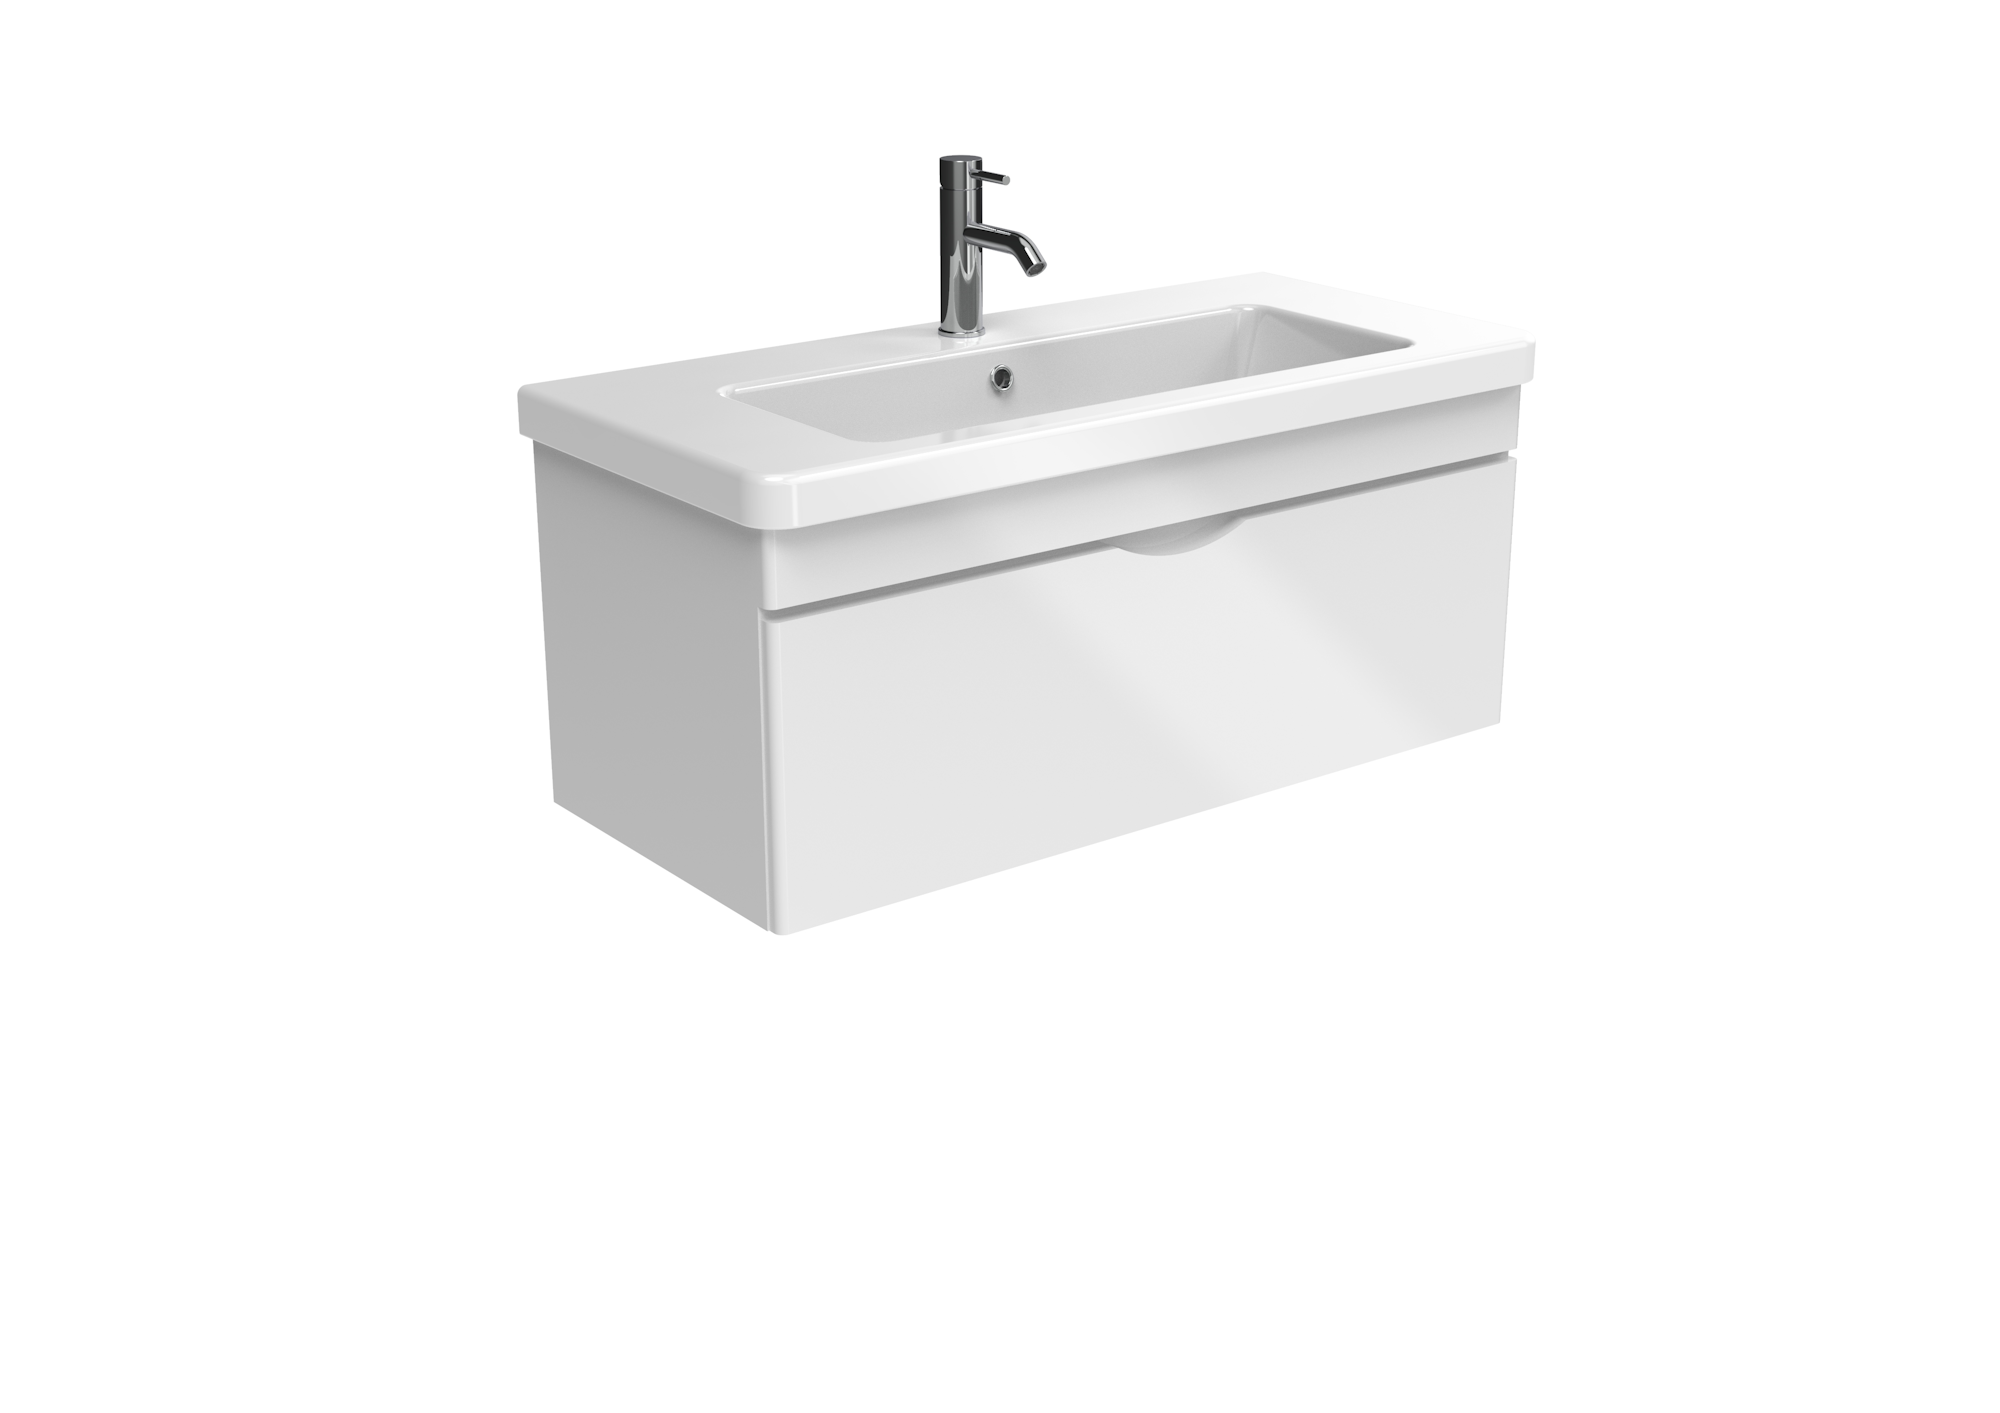 INDIGO 100cm 1 drawer wall mounted unit - Gloss White